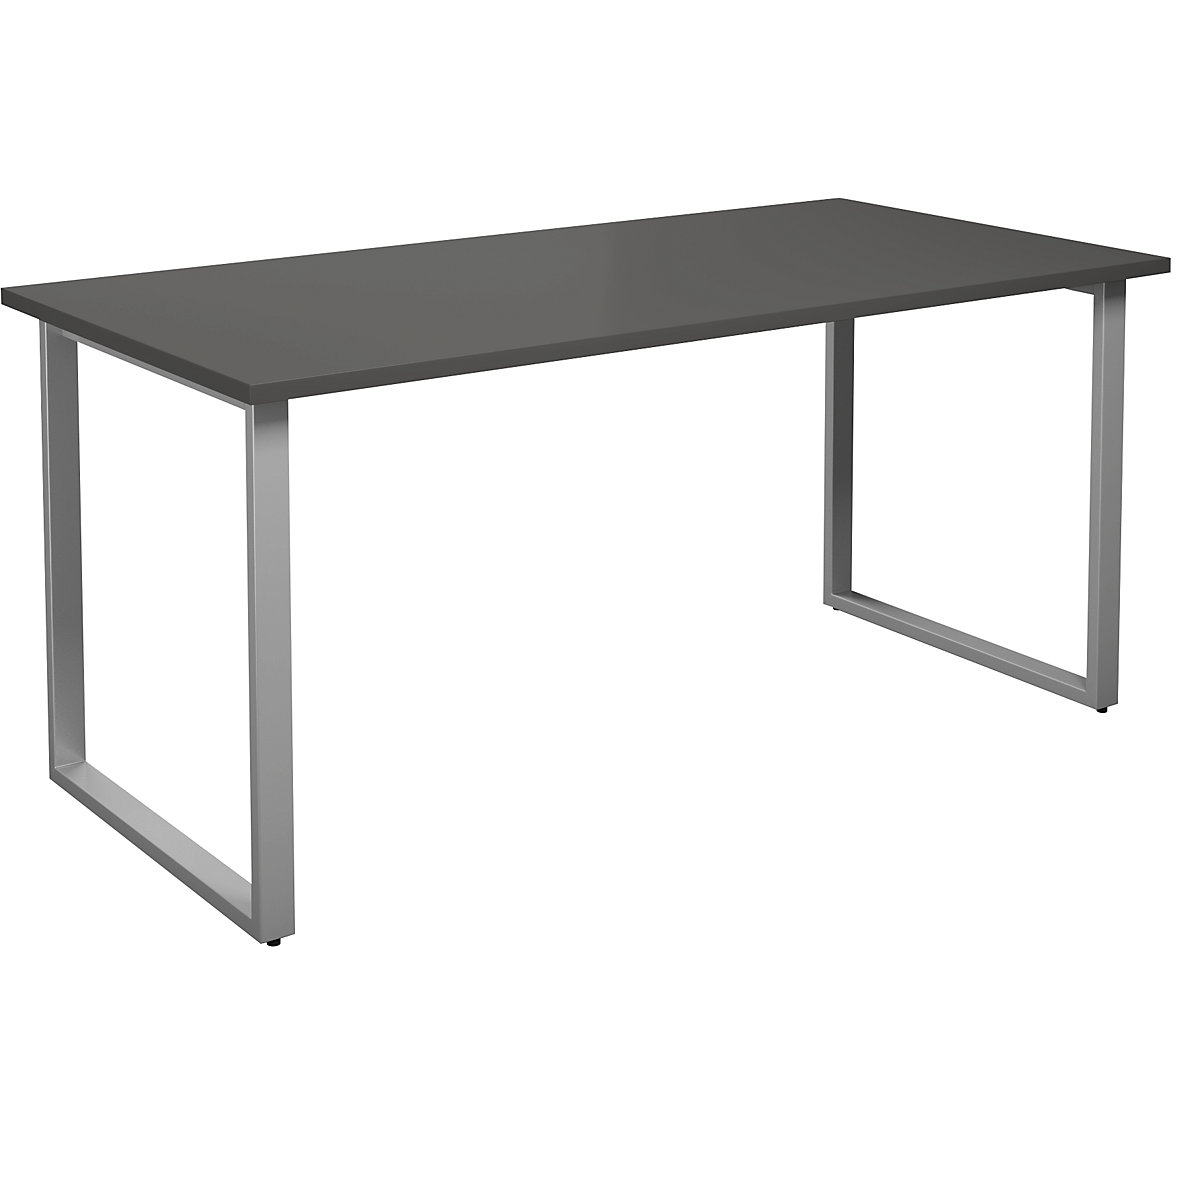 DUO-O multi-purpose desk, straight tabletop, WxD 1600 x 800 mm, dark grey, silver-7